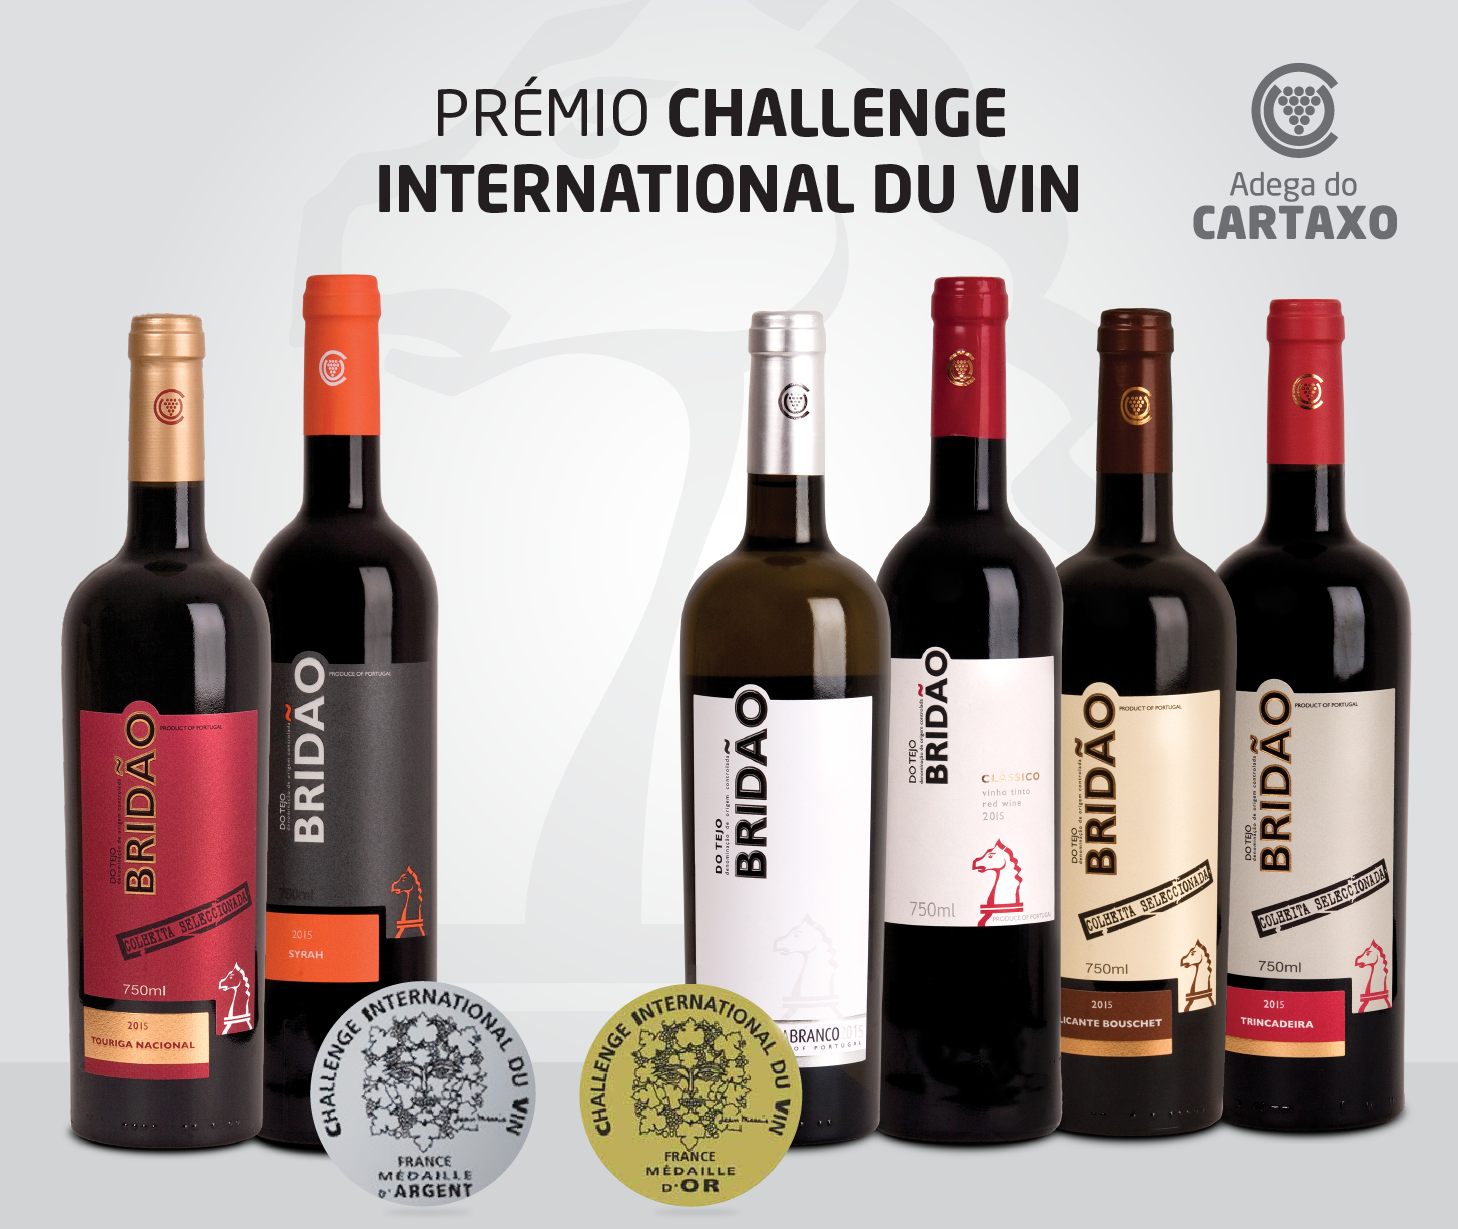 Adega do Cartaxo won 6 medals at the Challenge International du Vin Contest